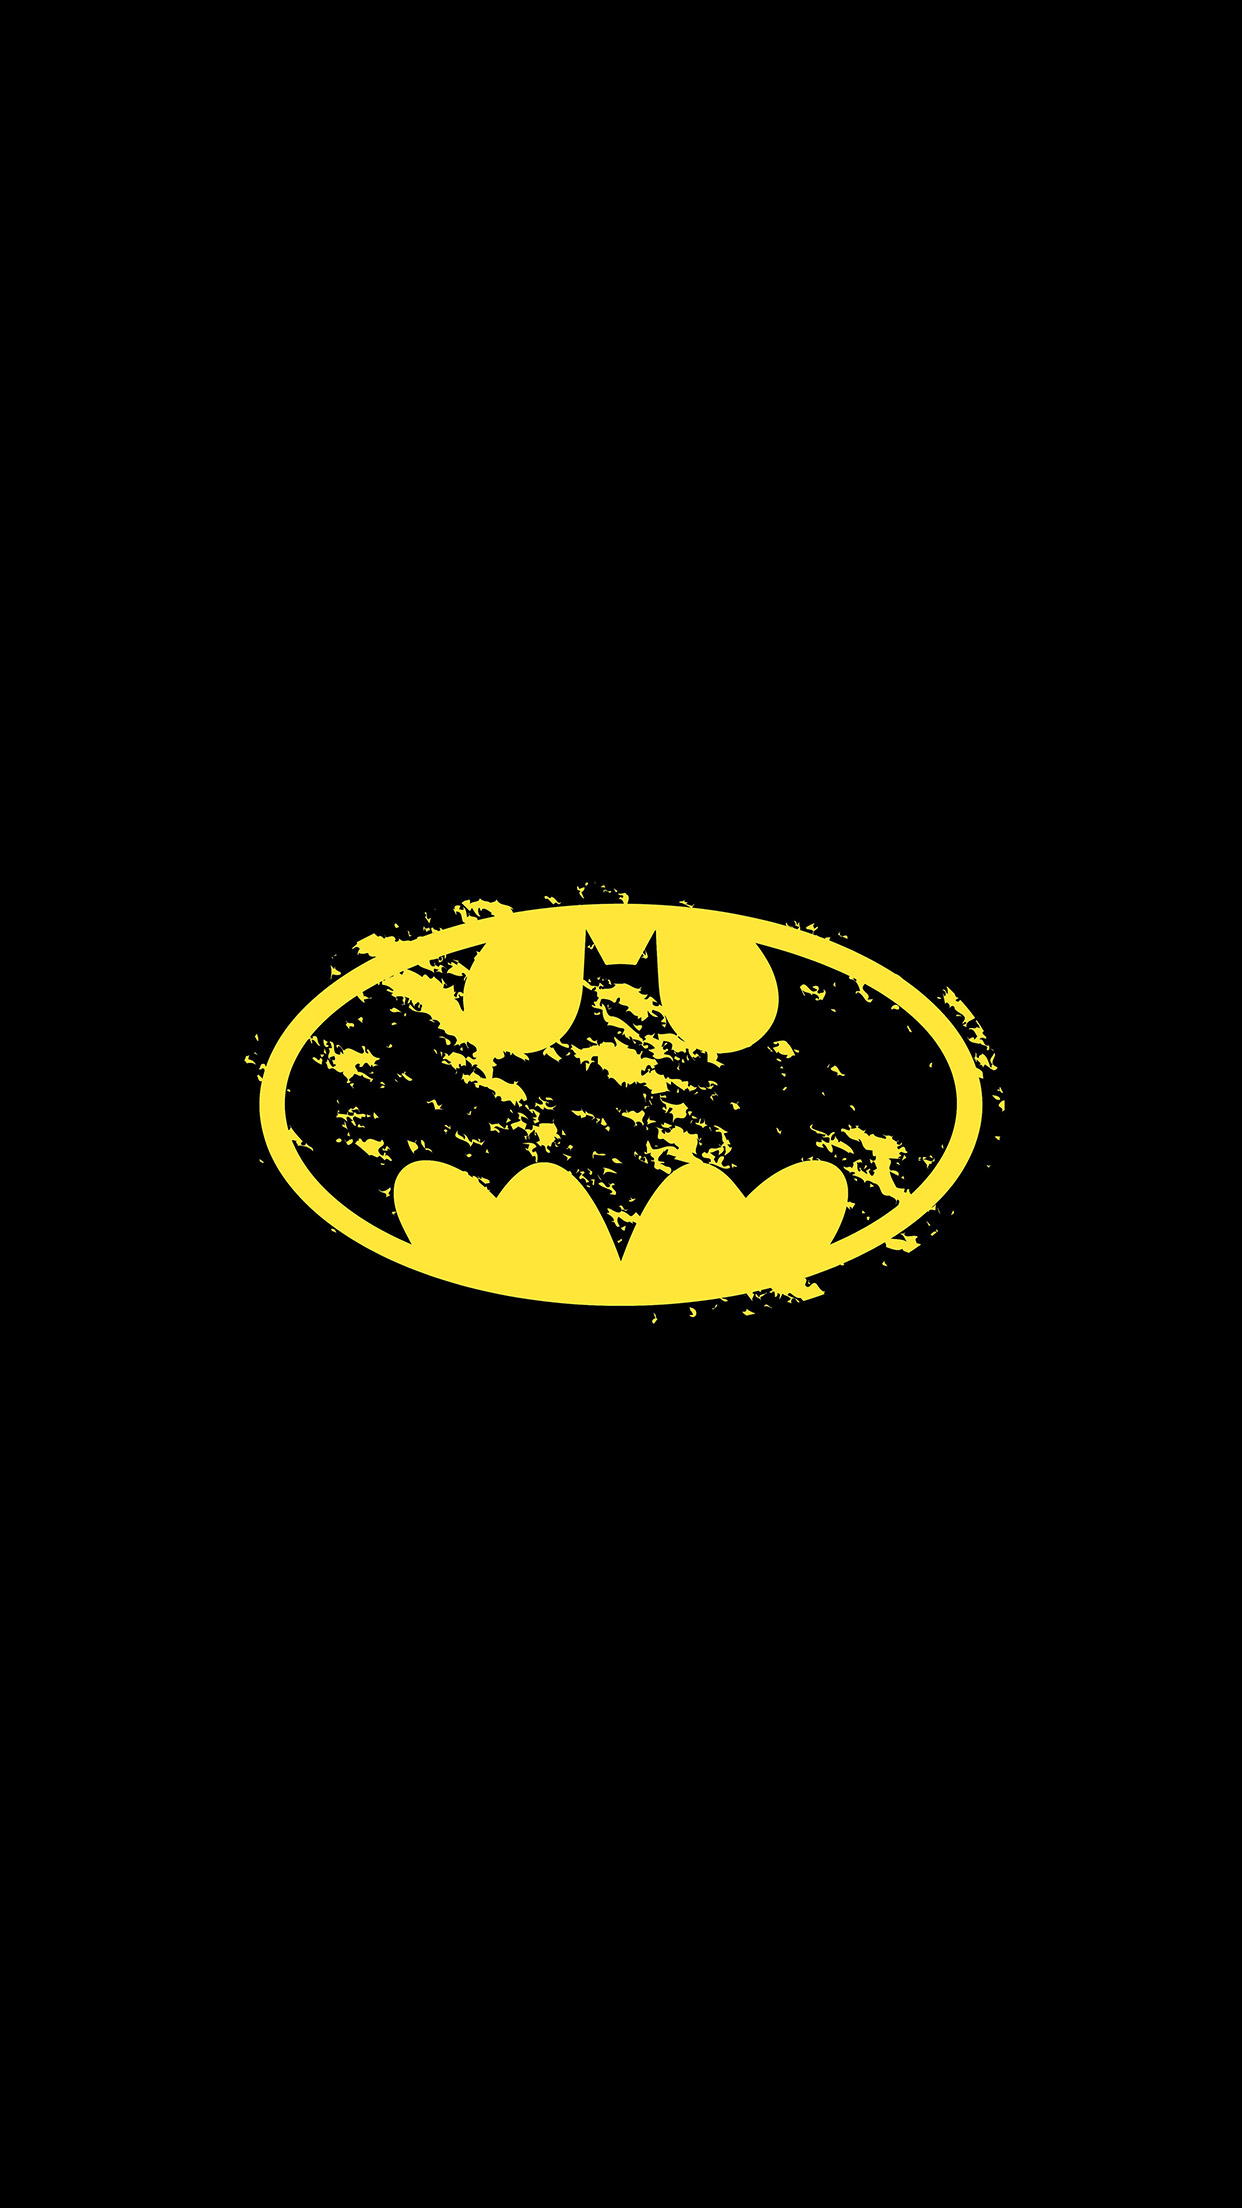 ipad fondos de pantalla arte,negro,amarillo,hombre murciélago,fuente,emblema